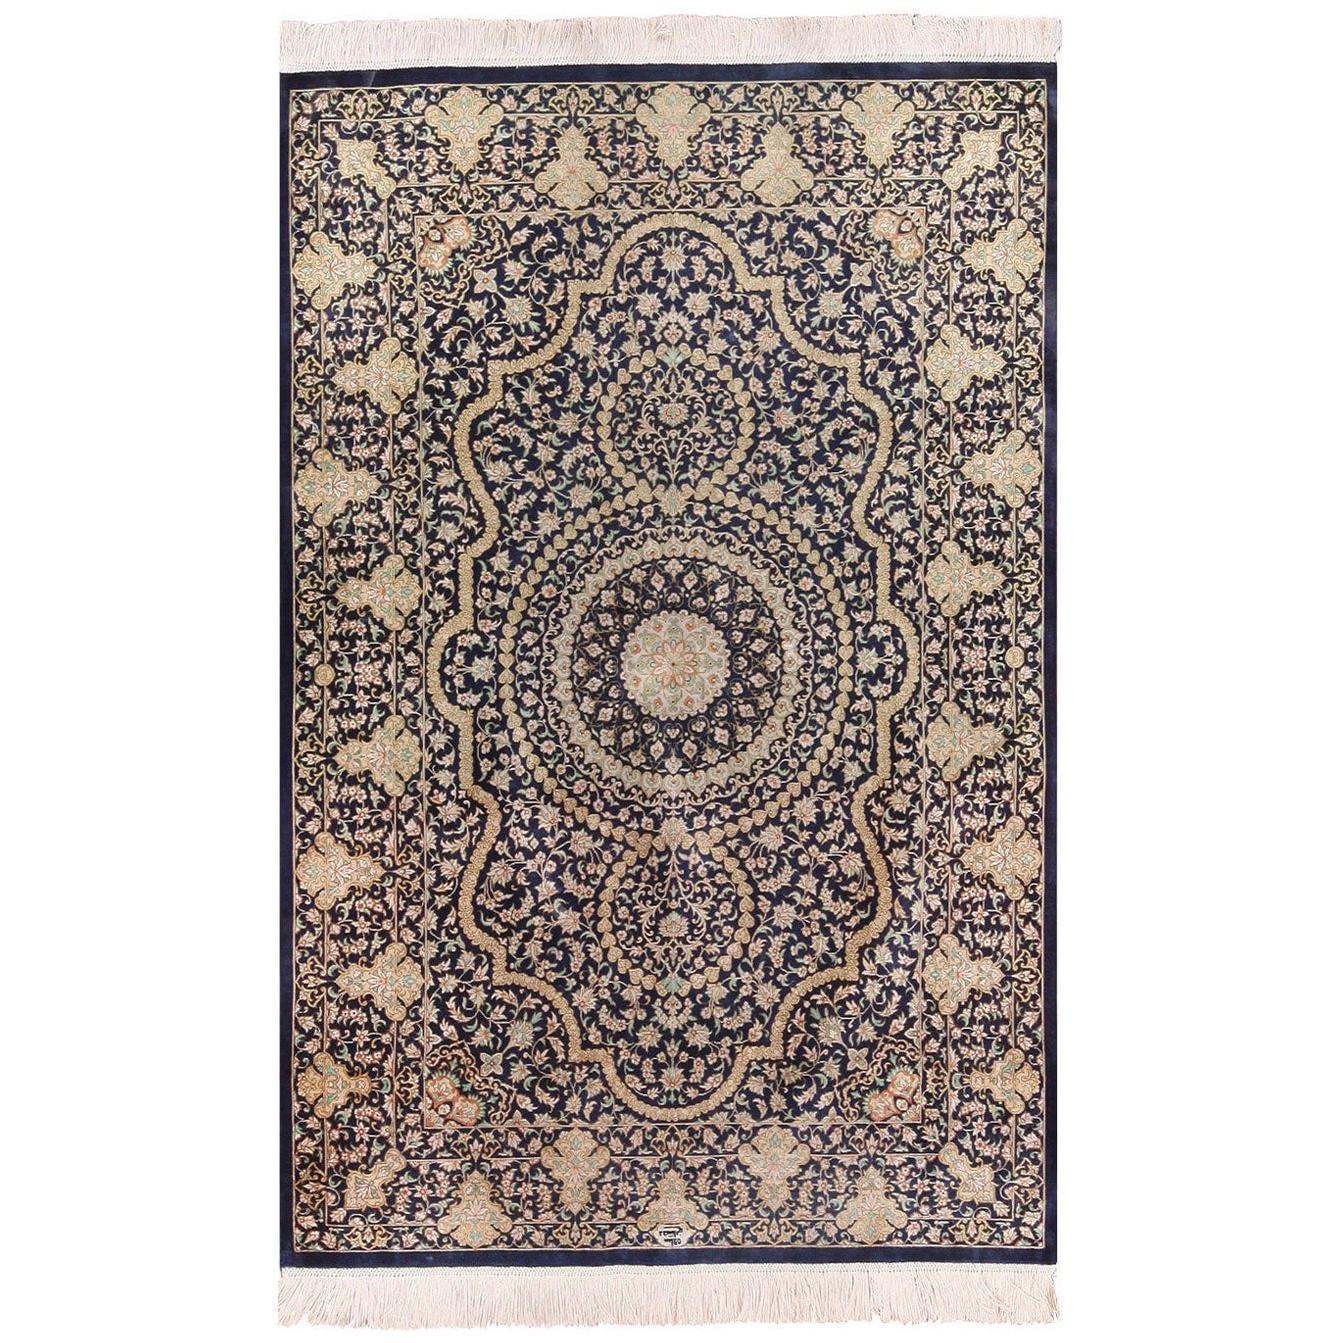 Vintage Persian Silk Qum Rug. Size: 3 ft 3 in x 4 ft 10 in